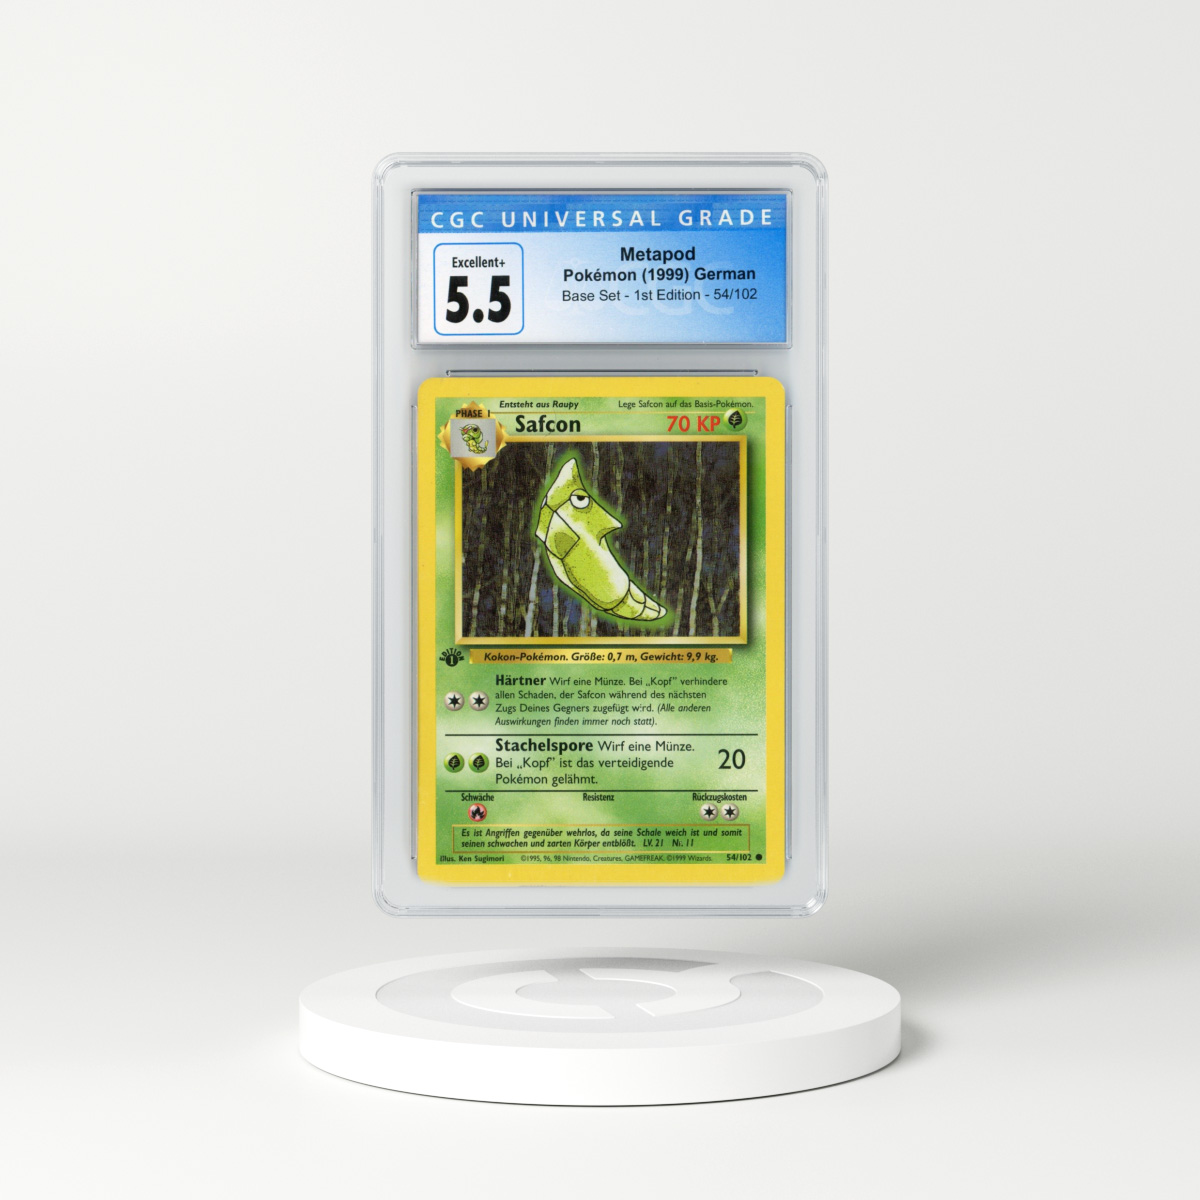 PSA 10 1st Edition Farfetch'd - Spanish - Pokemon Card